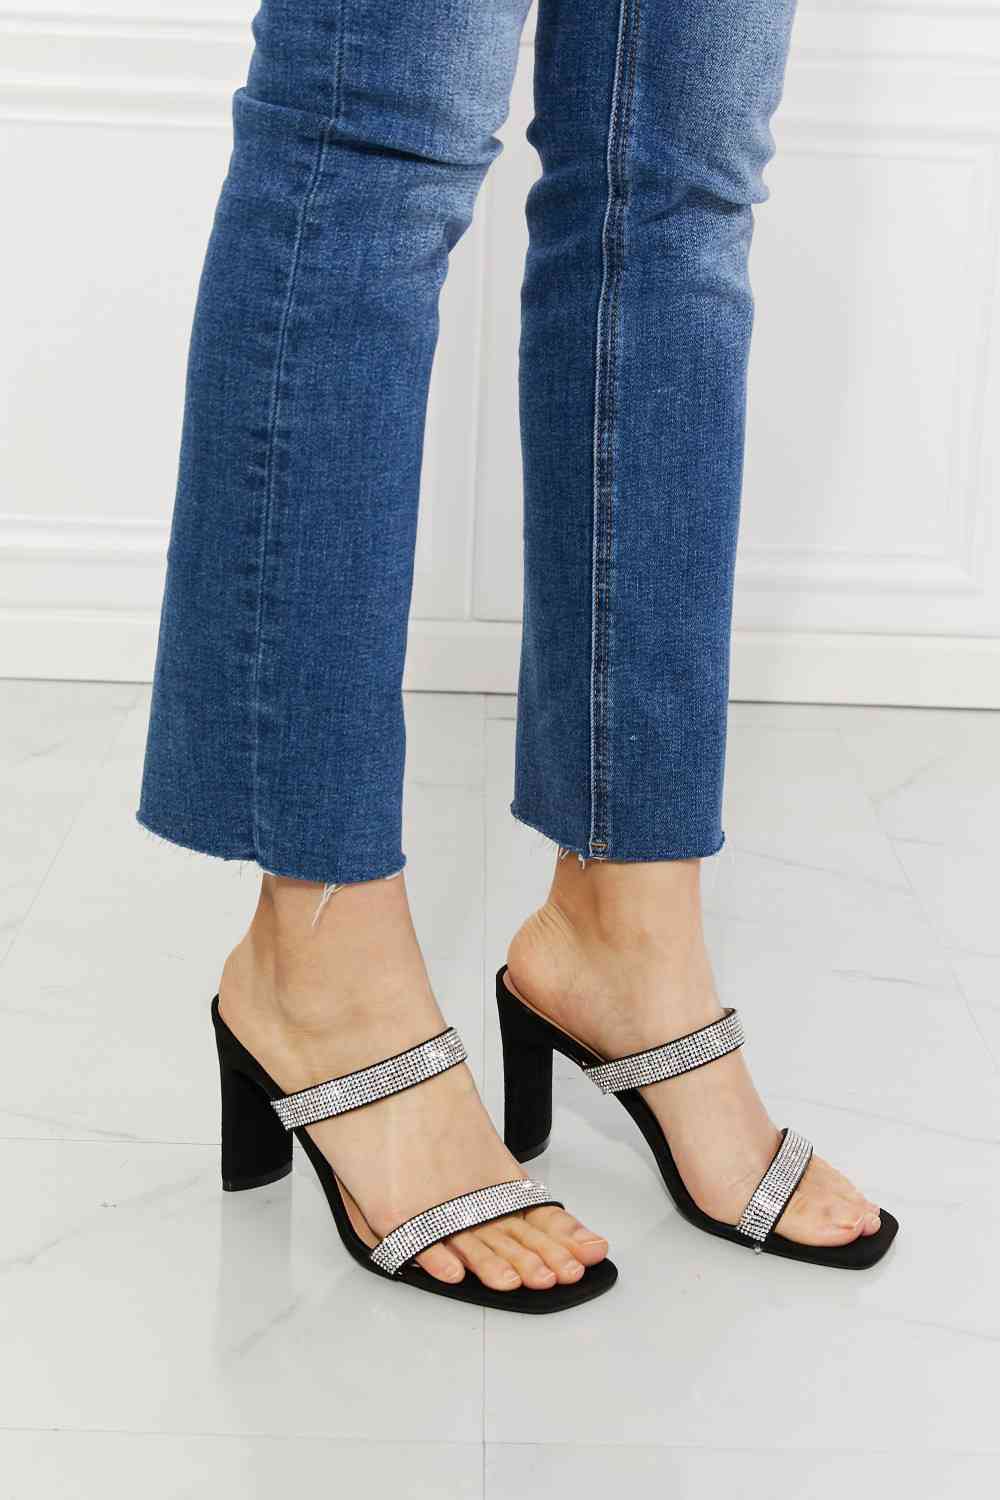 MMShoes Black Rhinestone Block Heel Sandal with Sparkle